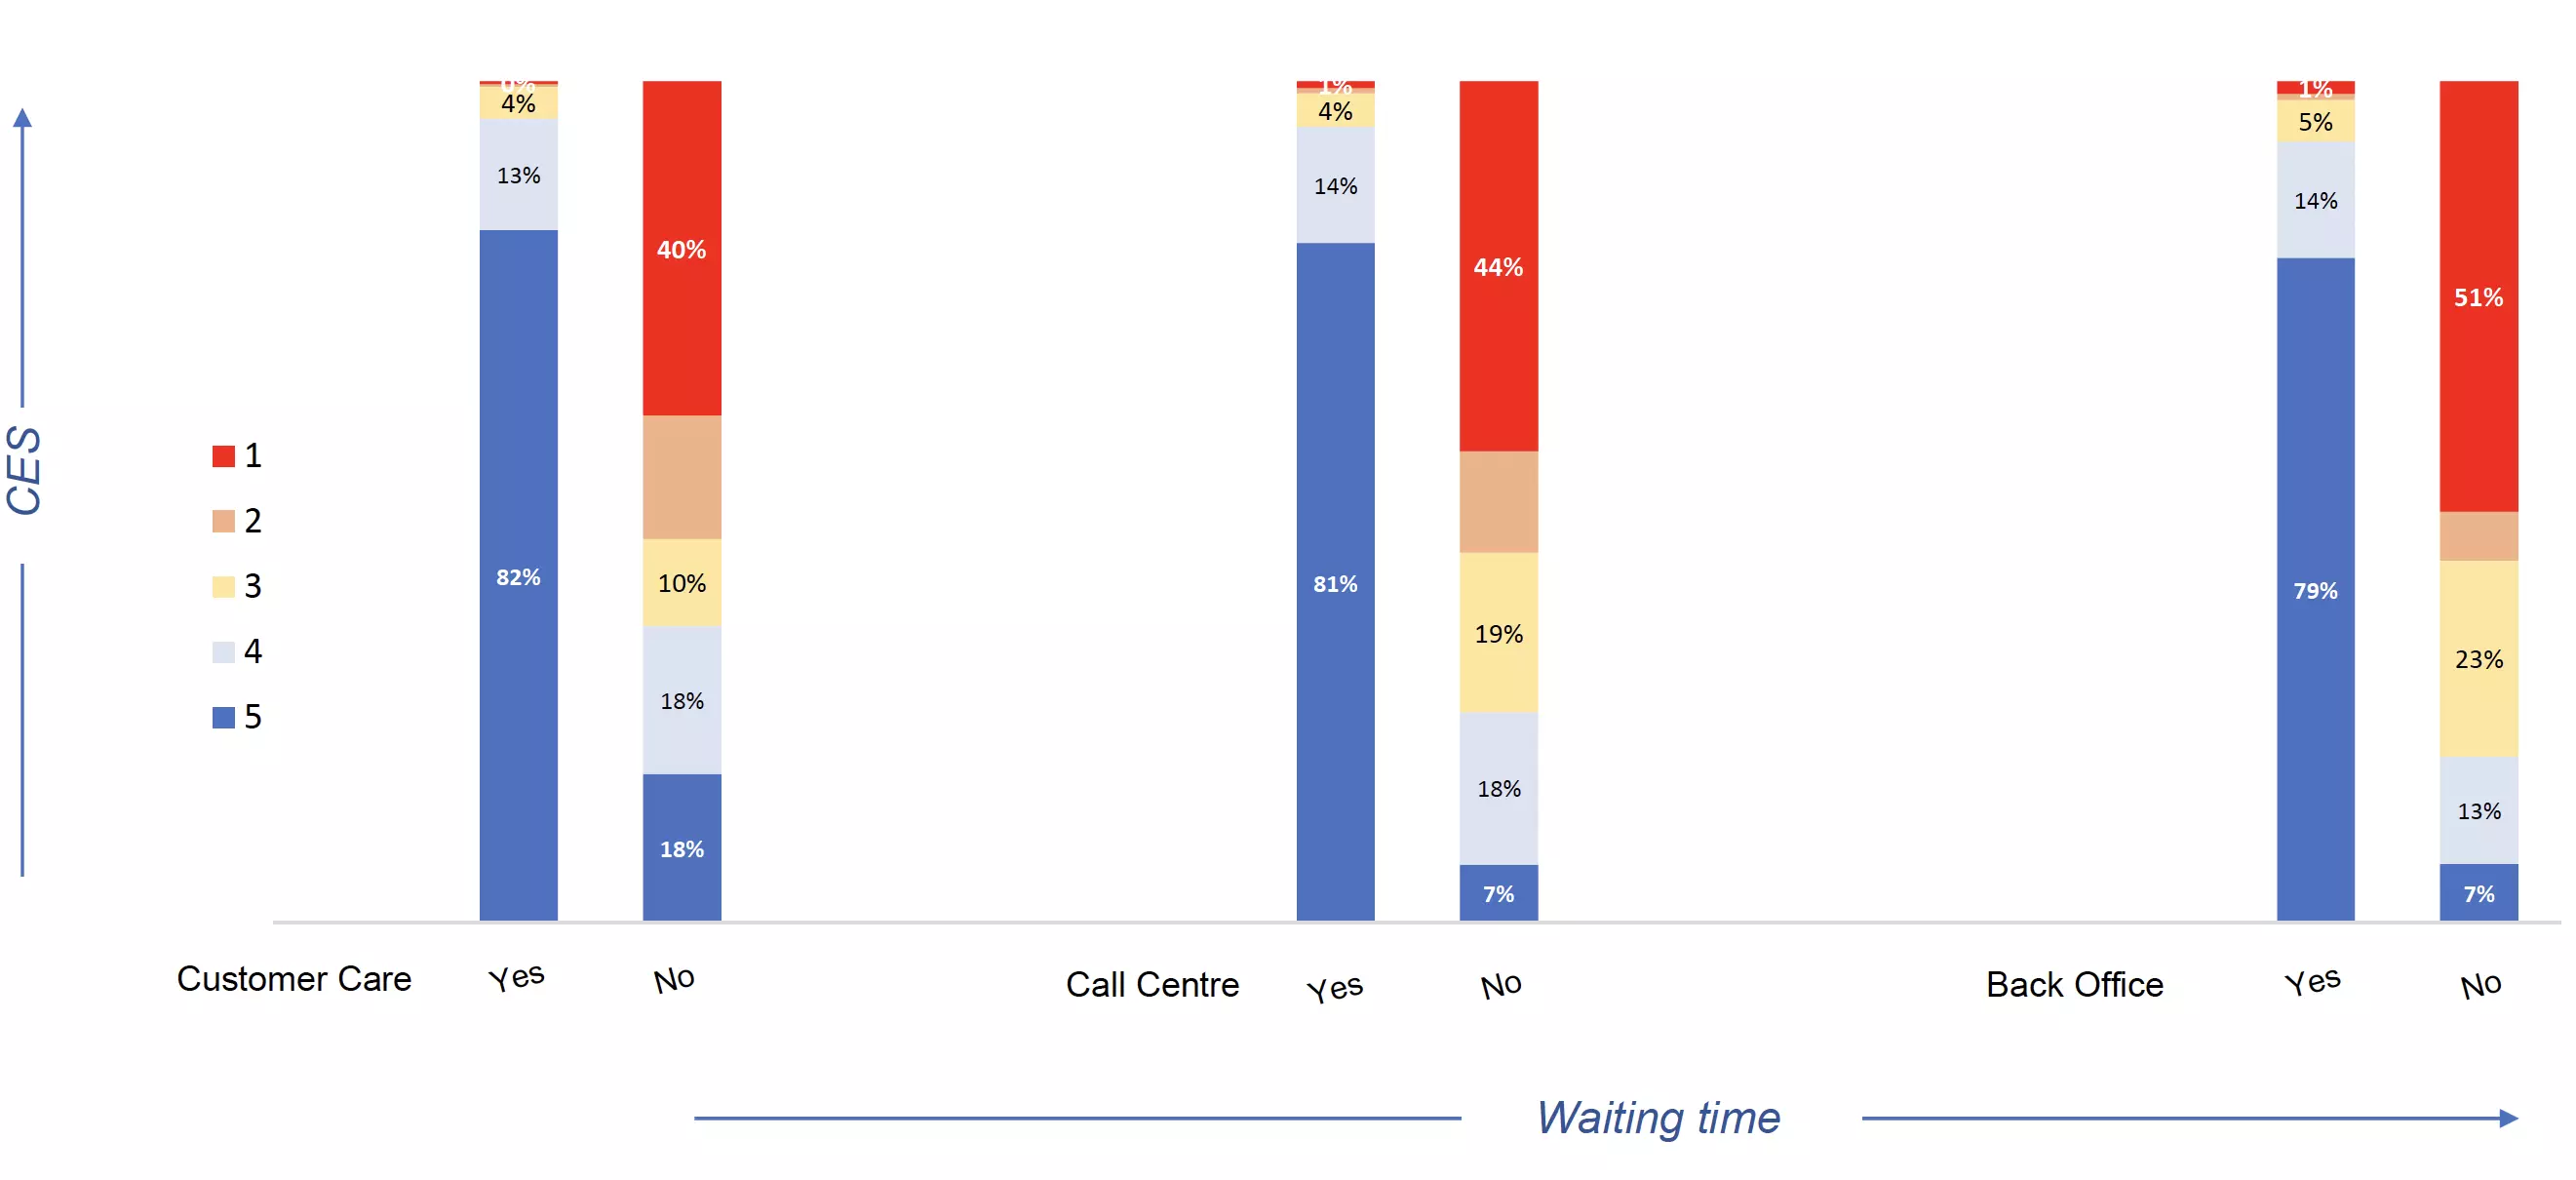 CES vs. Waiting Time